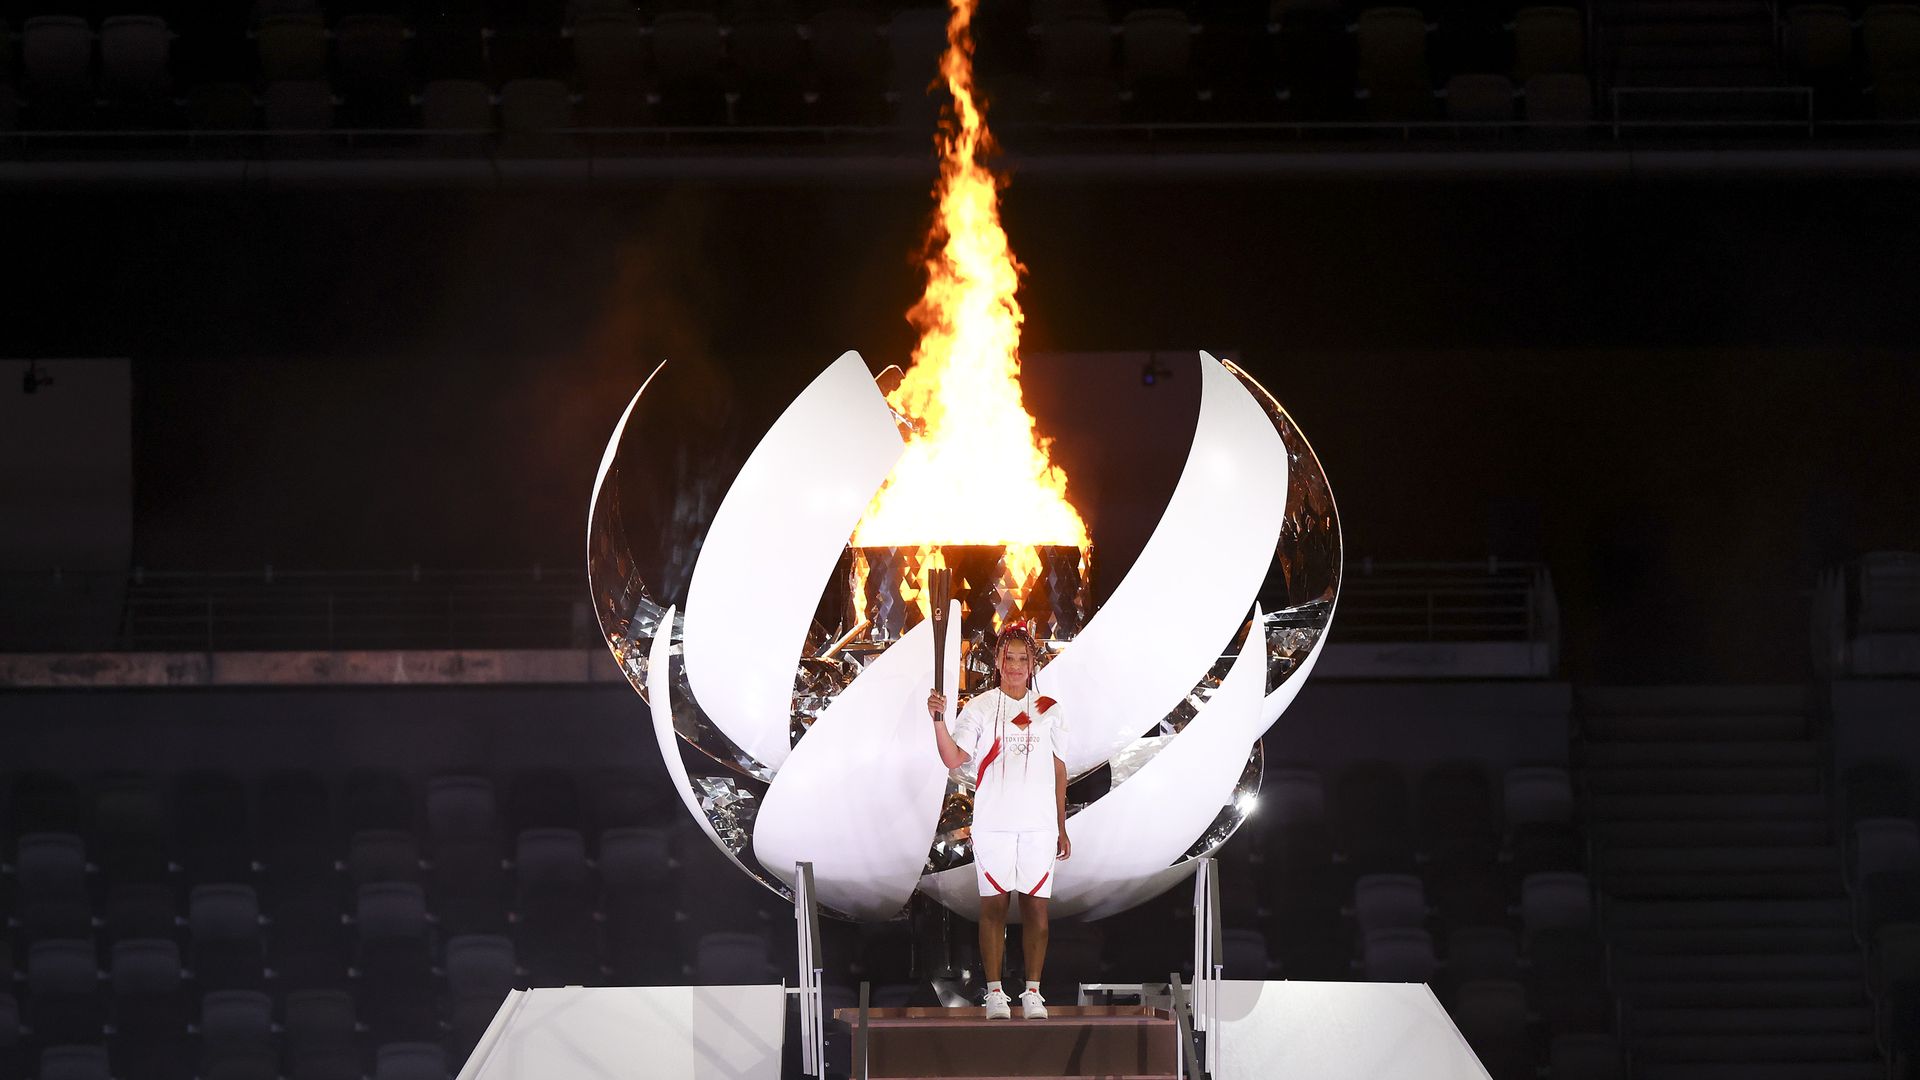 Naomi Osaka lights the Olympic cauldron. Photo: Clive Rose/Getty Images